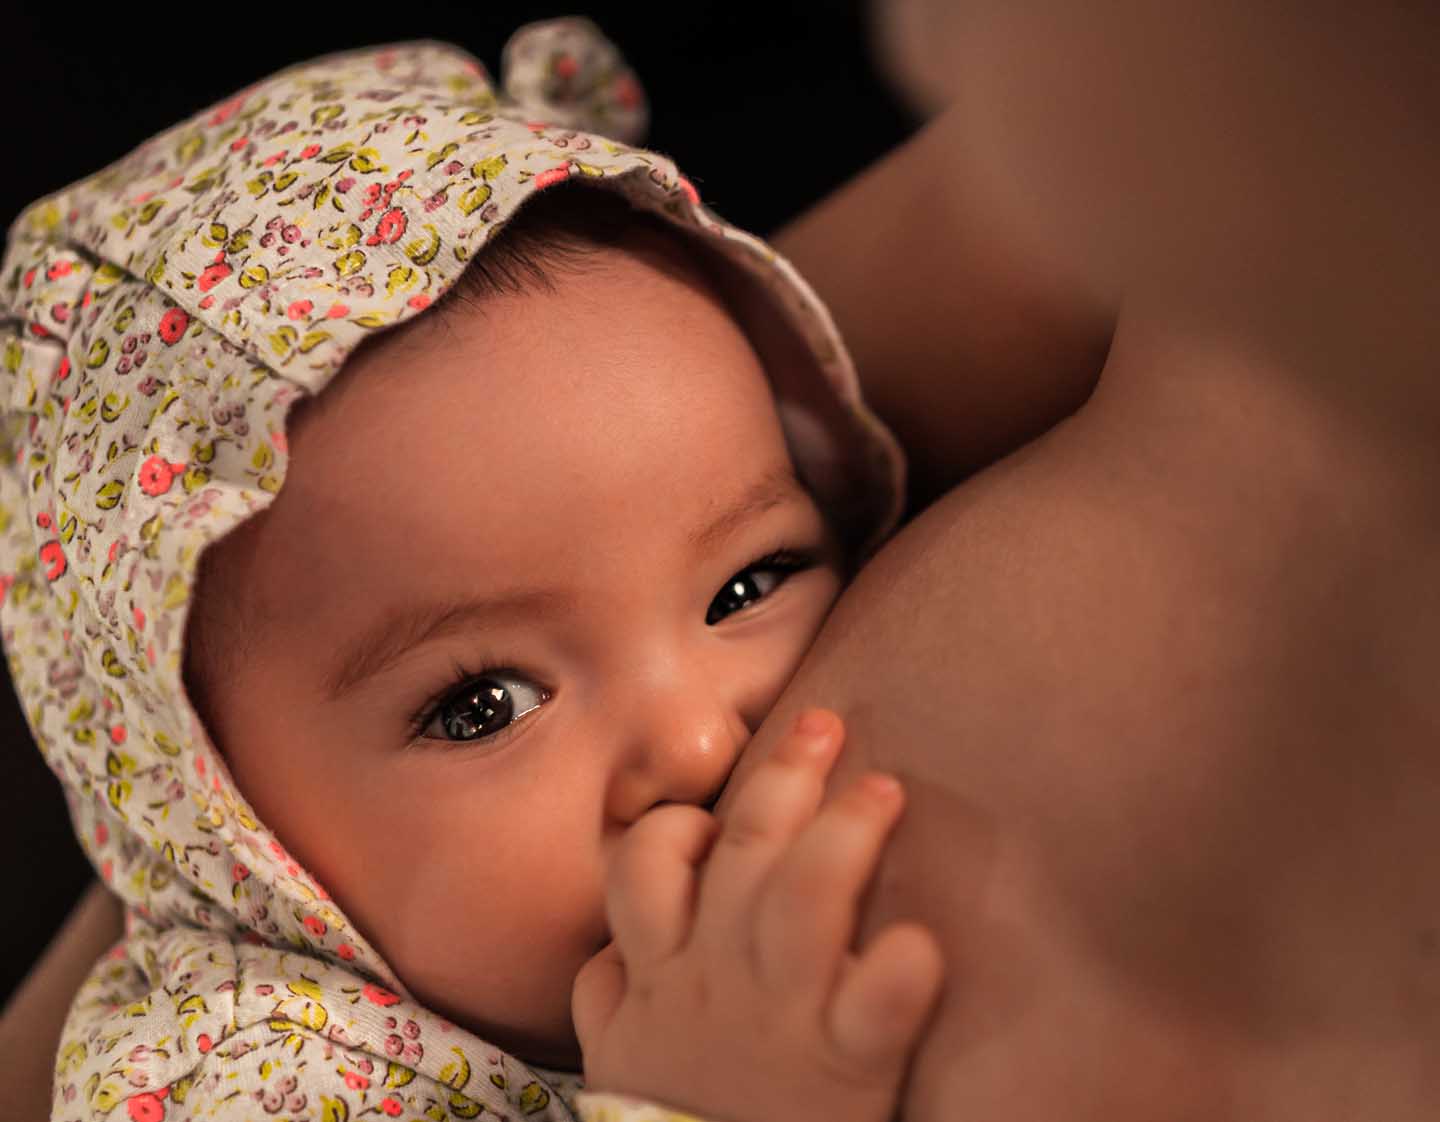 Breastfeeding with responsibility - Photo by Jonathan Borba from Pexels
